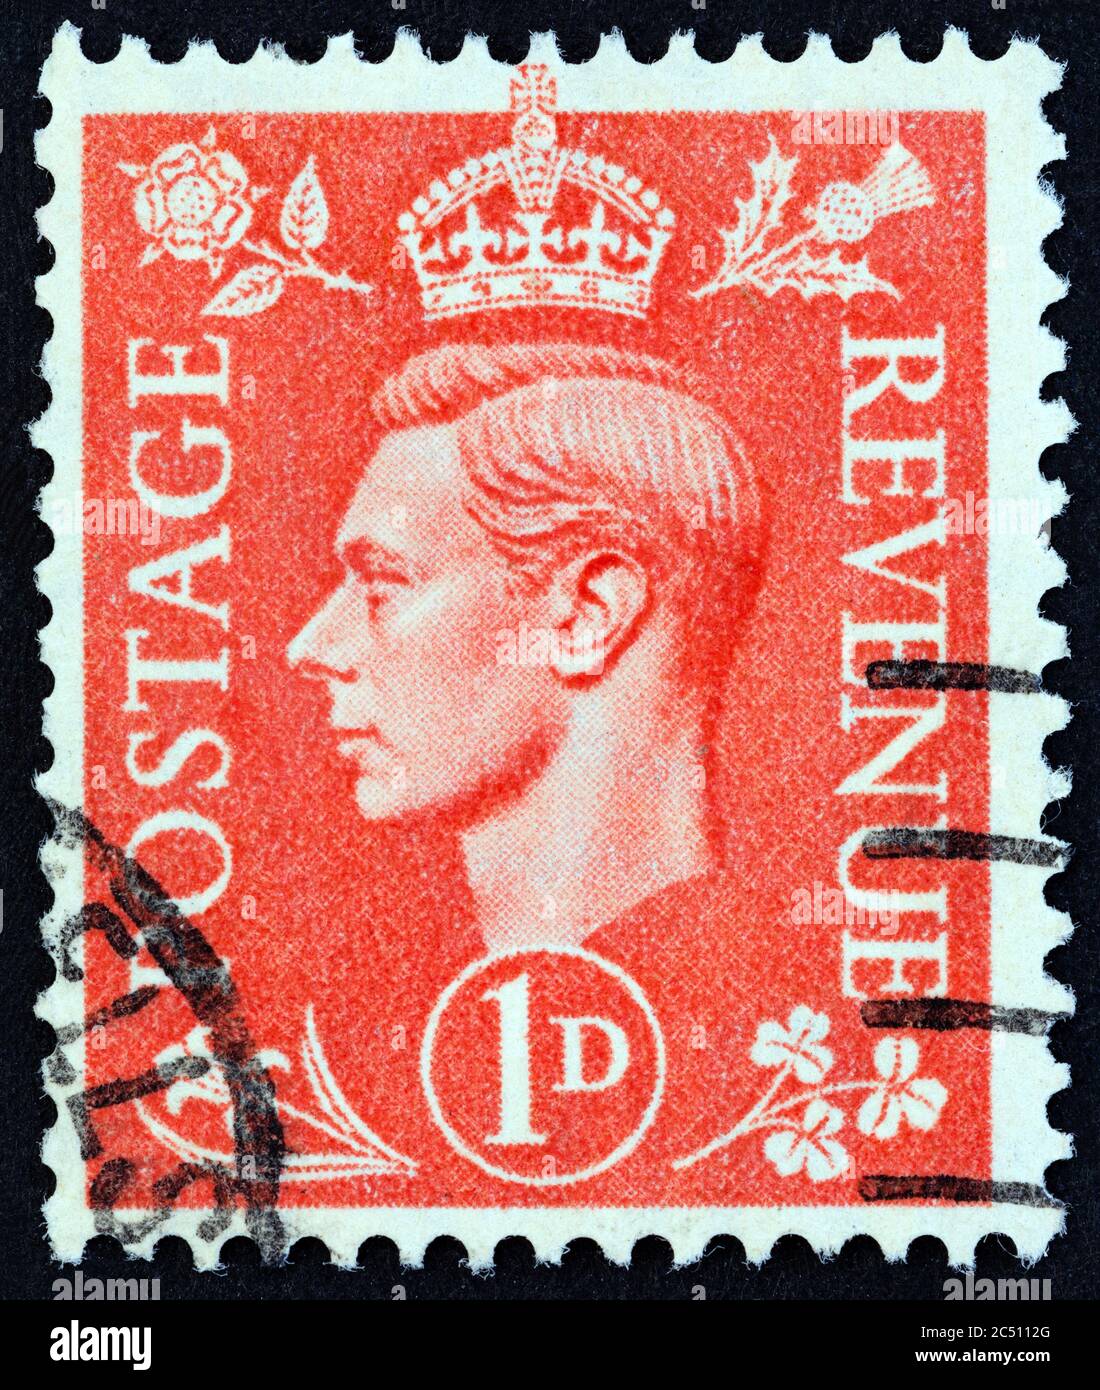 UNITED KINGDOM - CIRCA 1937: A stamp printed in United Kingdom shows King George VI, circa 1937. Stock Photo